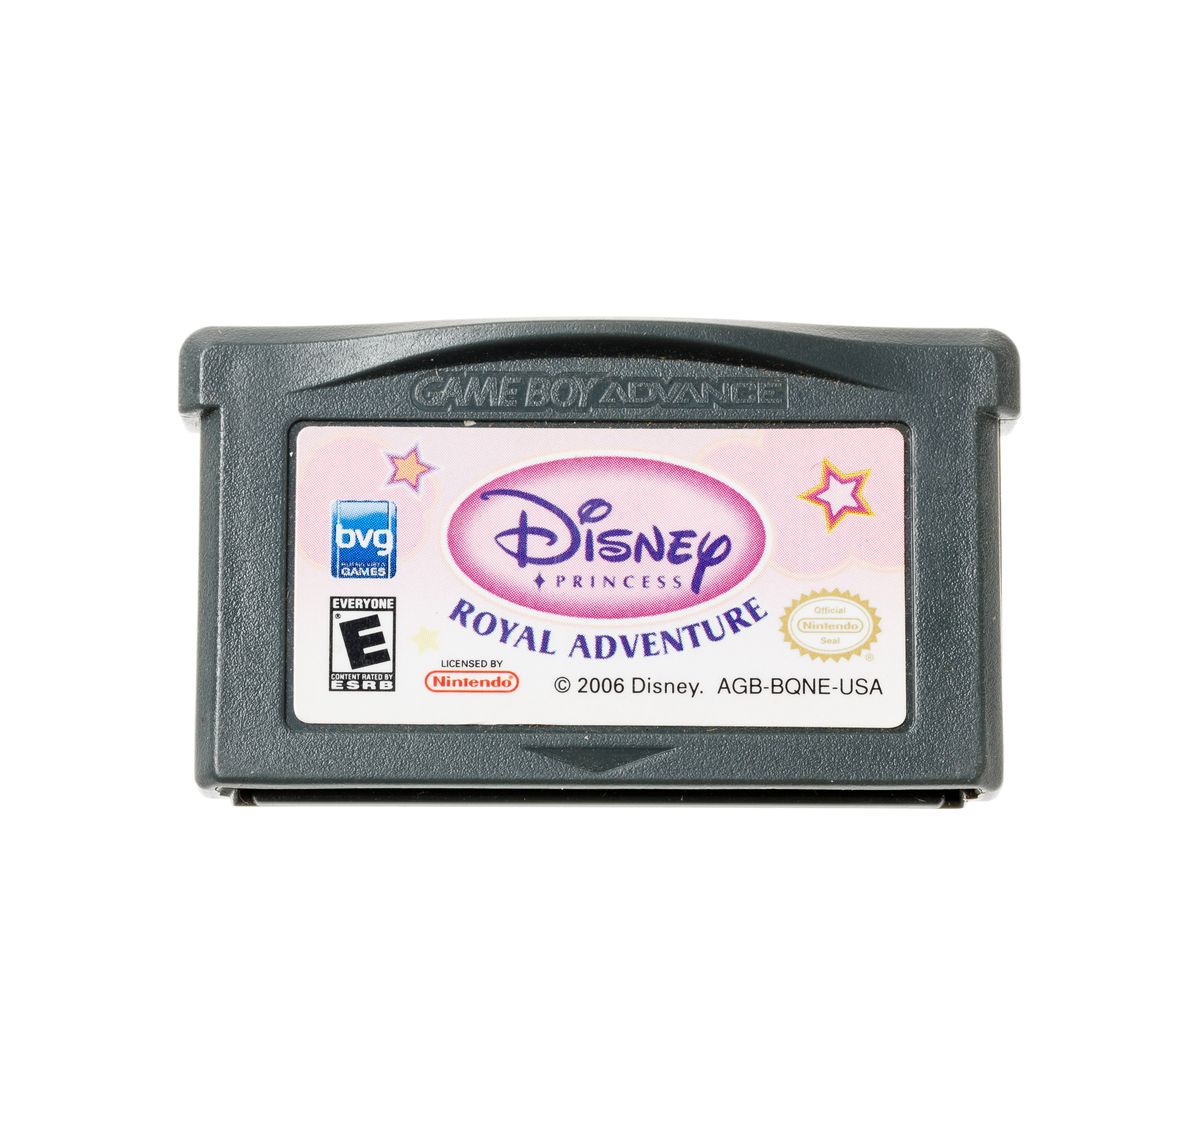 Disney Princess Royal Adventure - Gameboy Advance Games